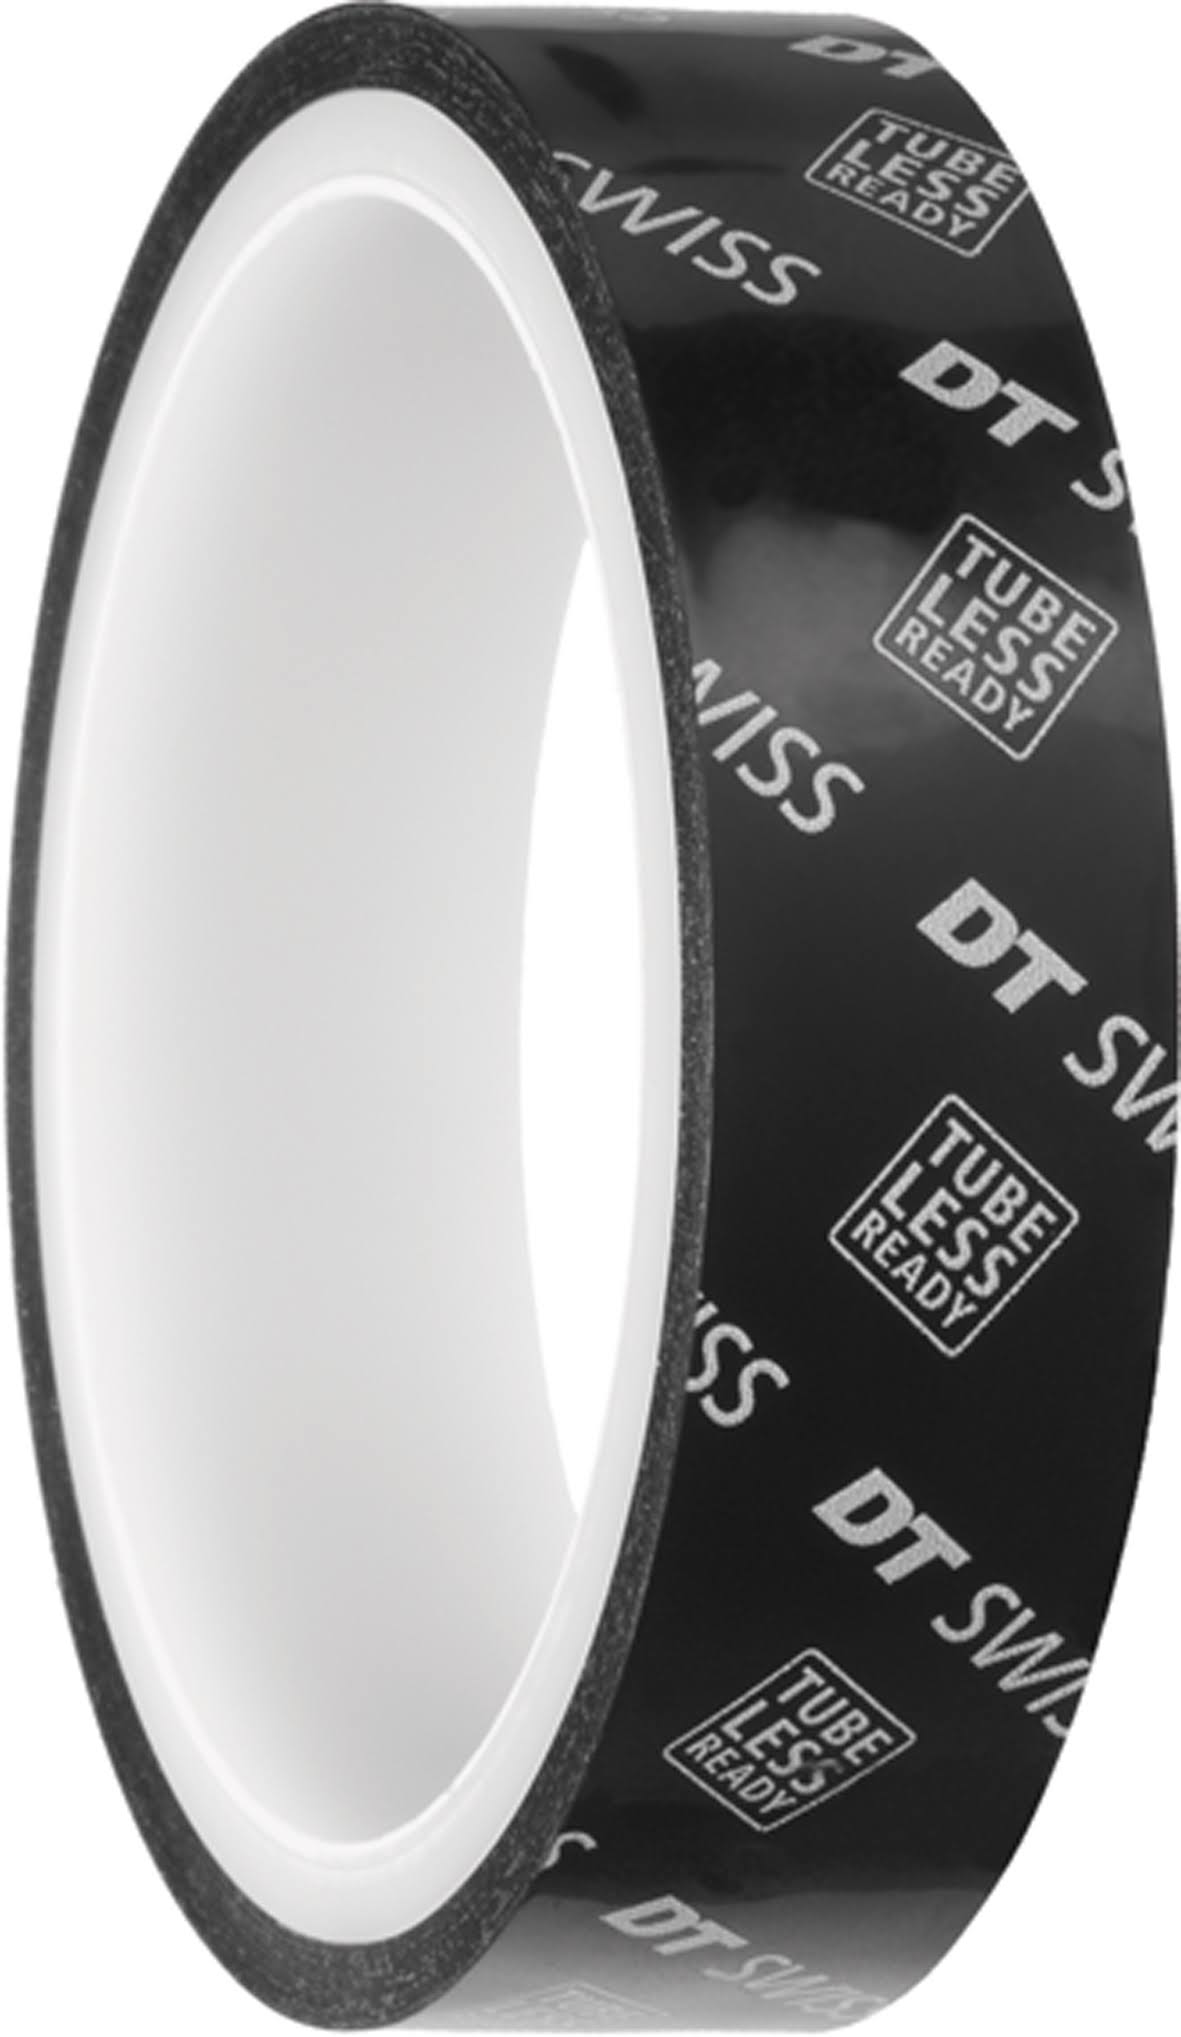 DT Swiss Tubeless Rim Tape - Black, 27mm x10m